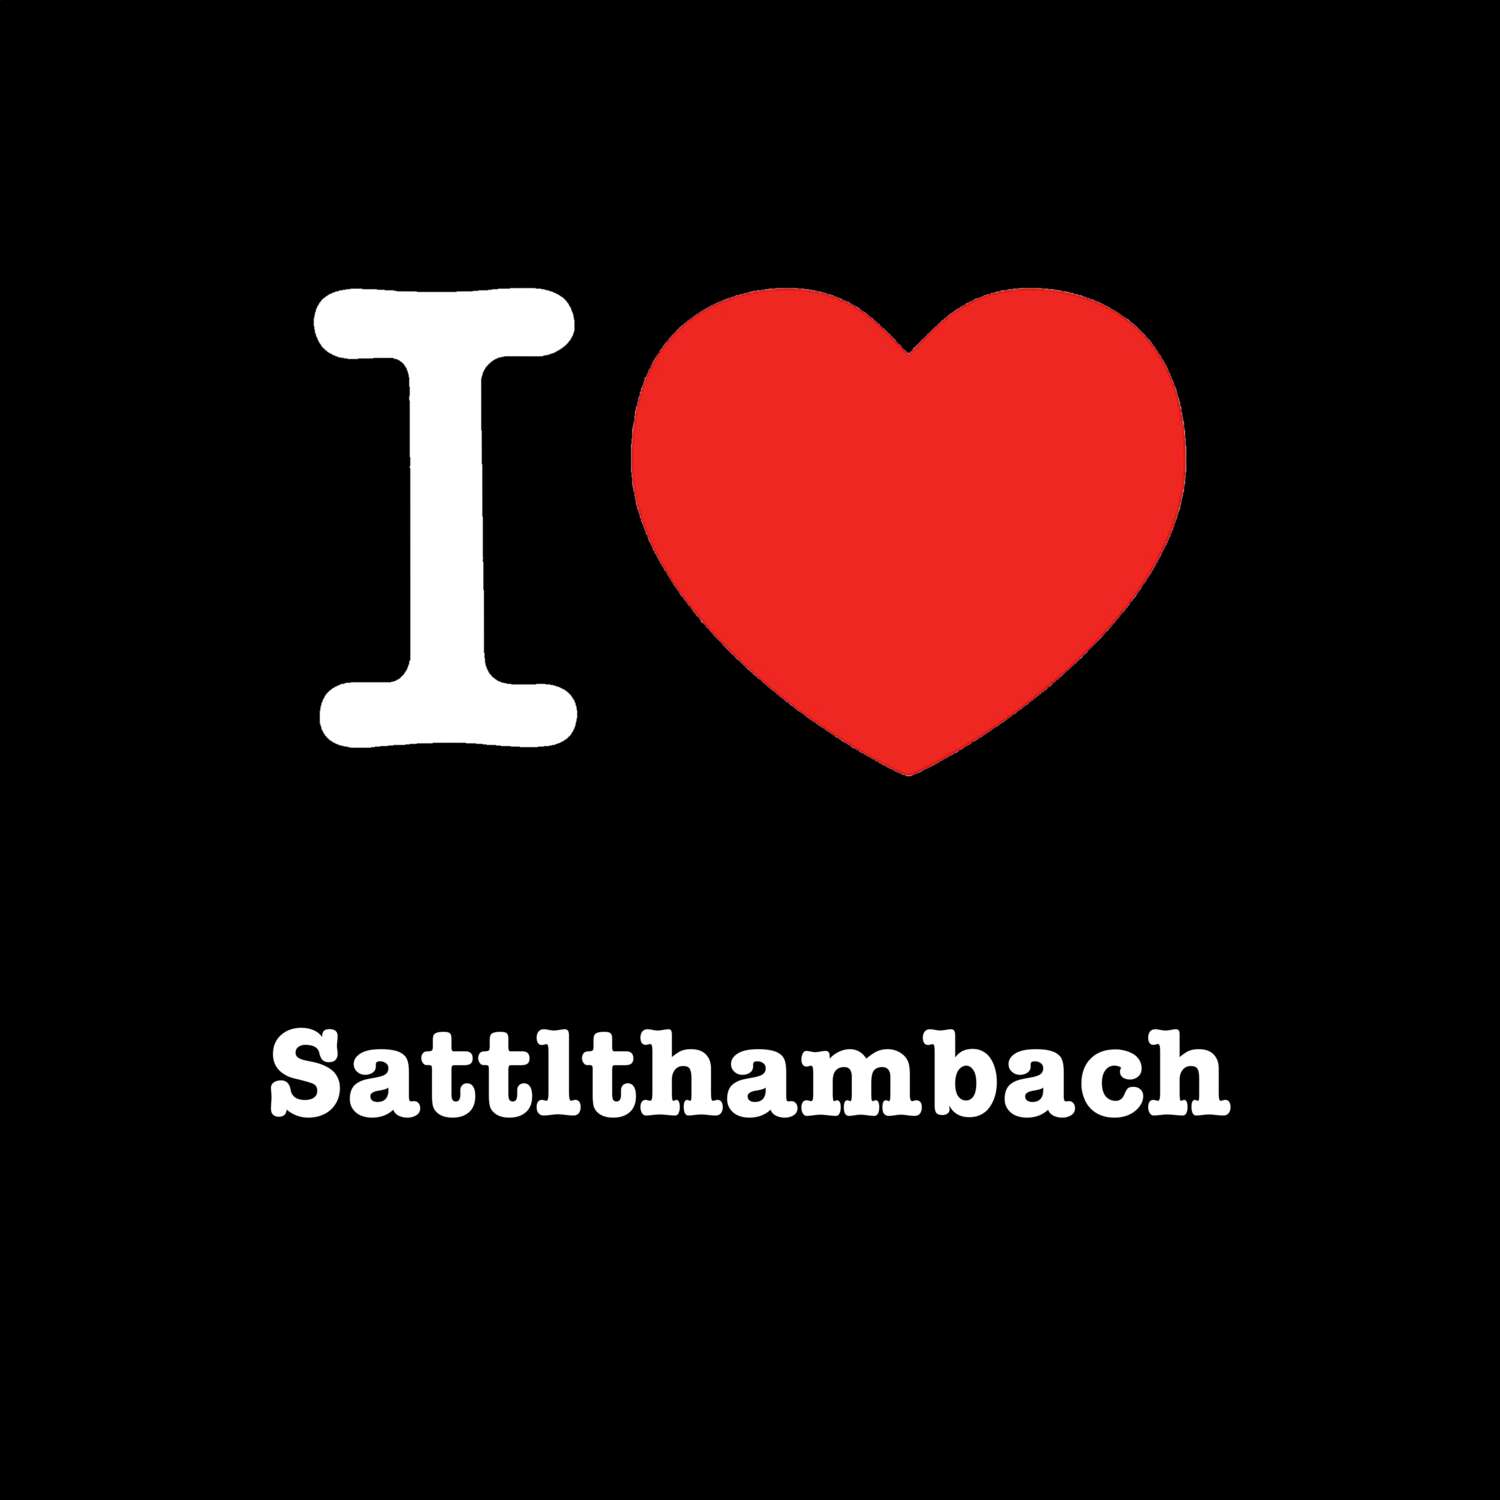 Sattlthambach T-Shirt »I love«